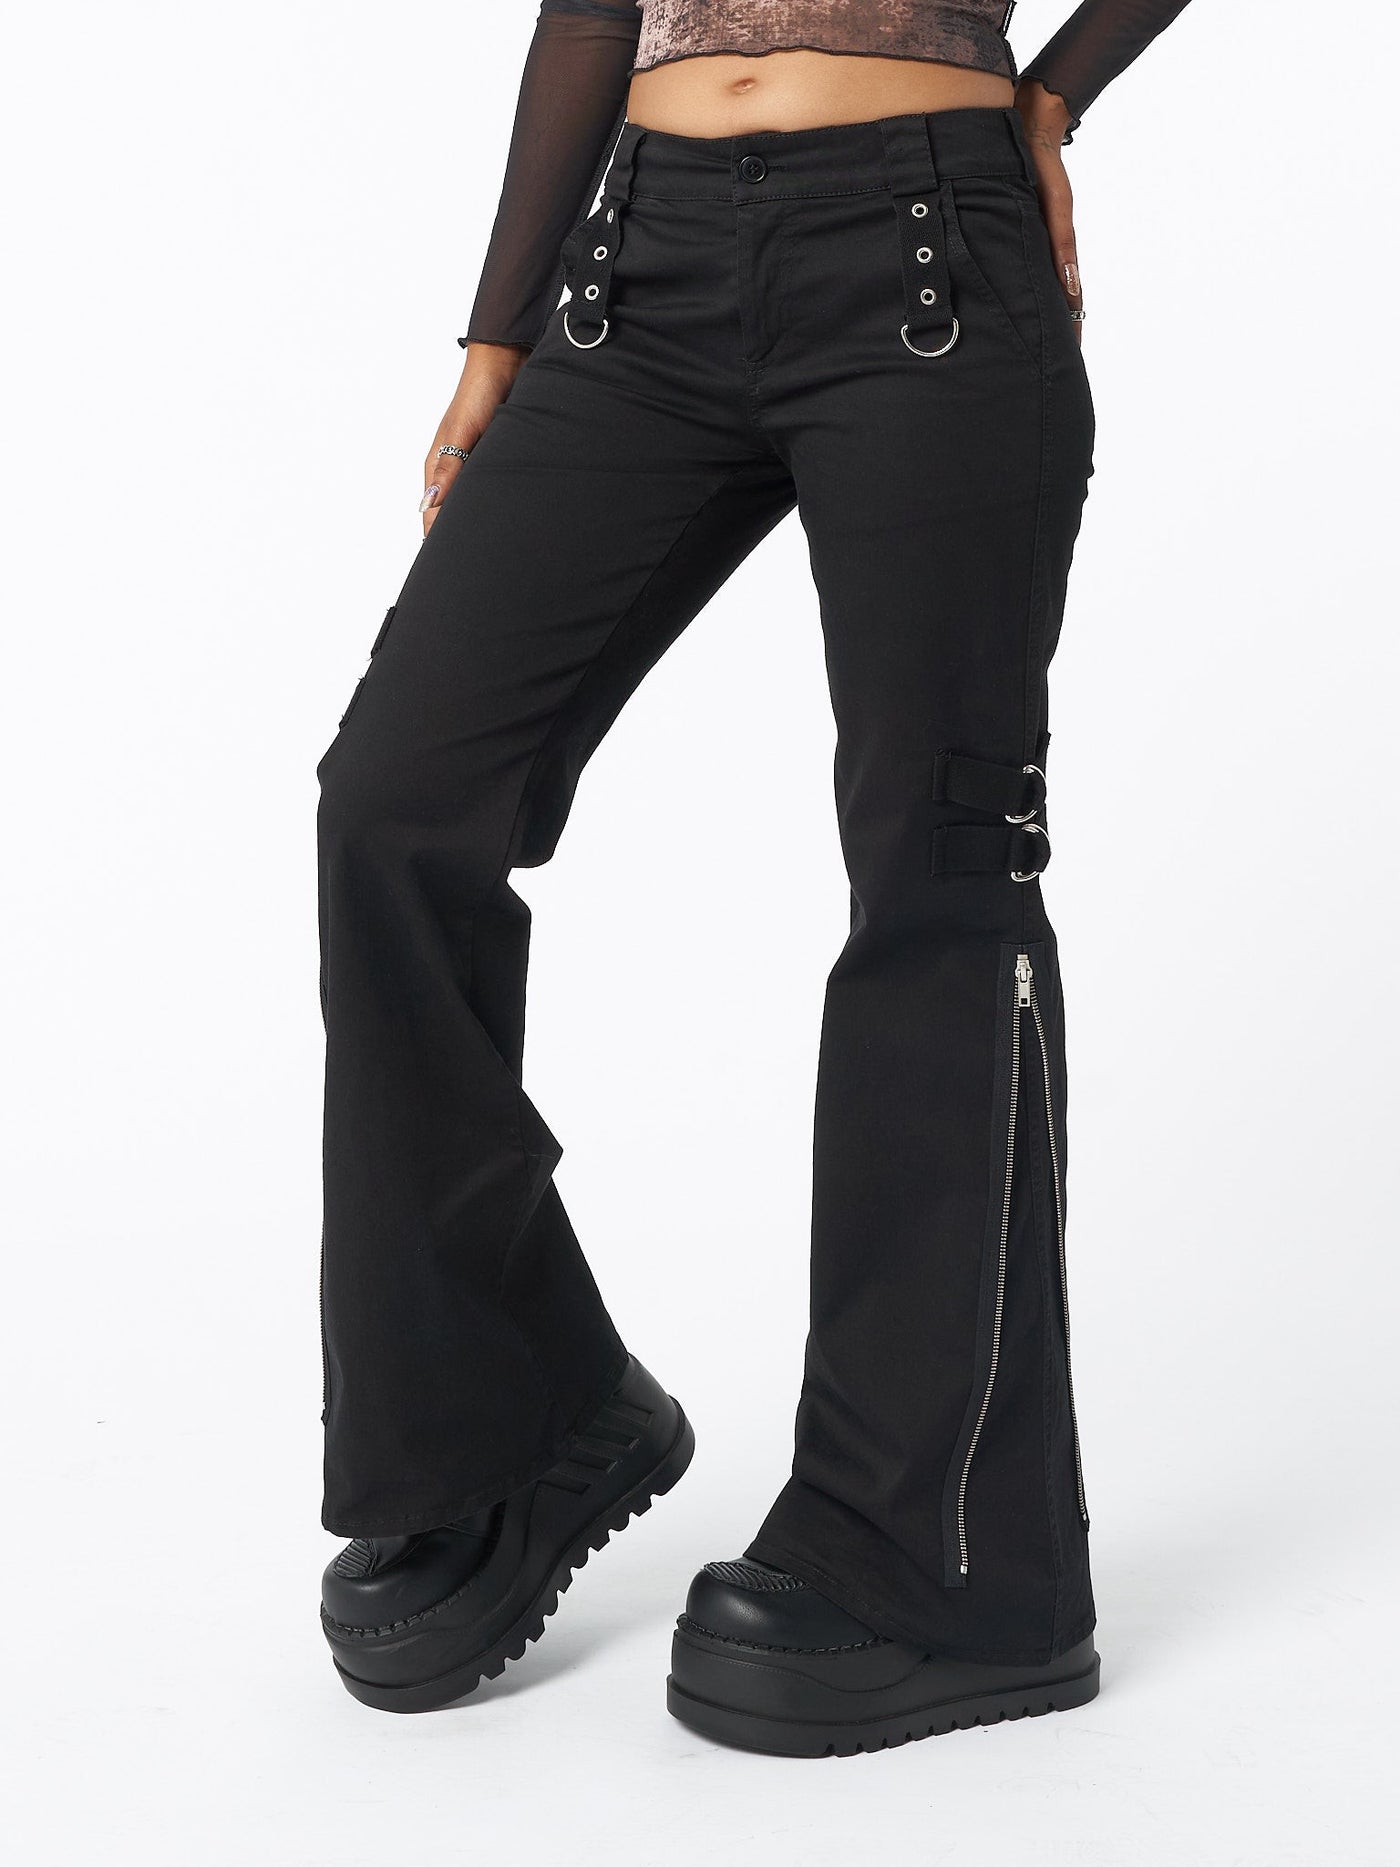 Black Rave Zip Pants